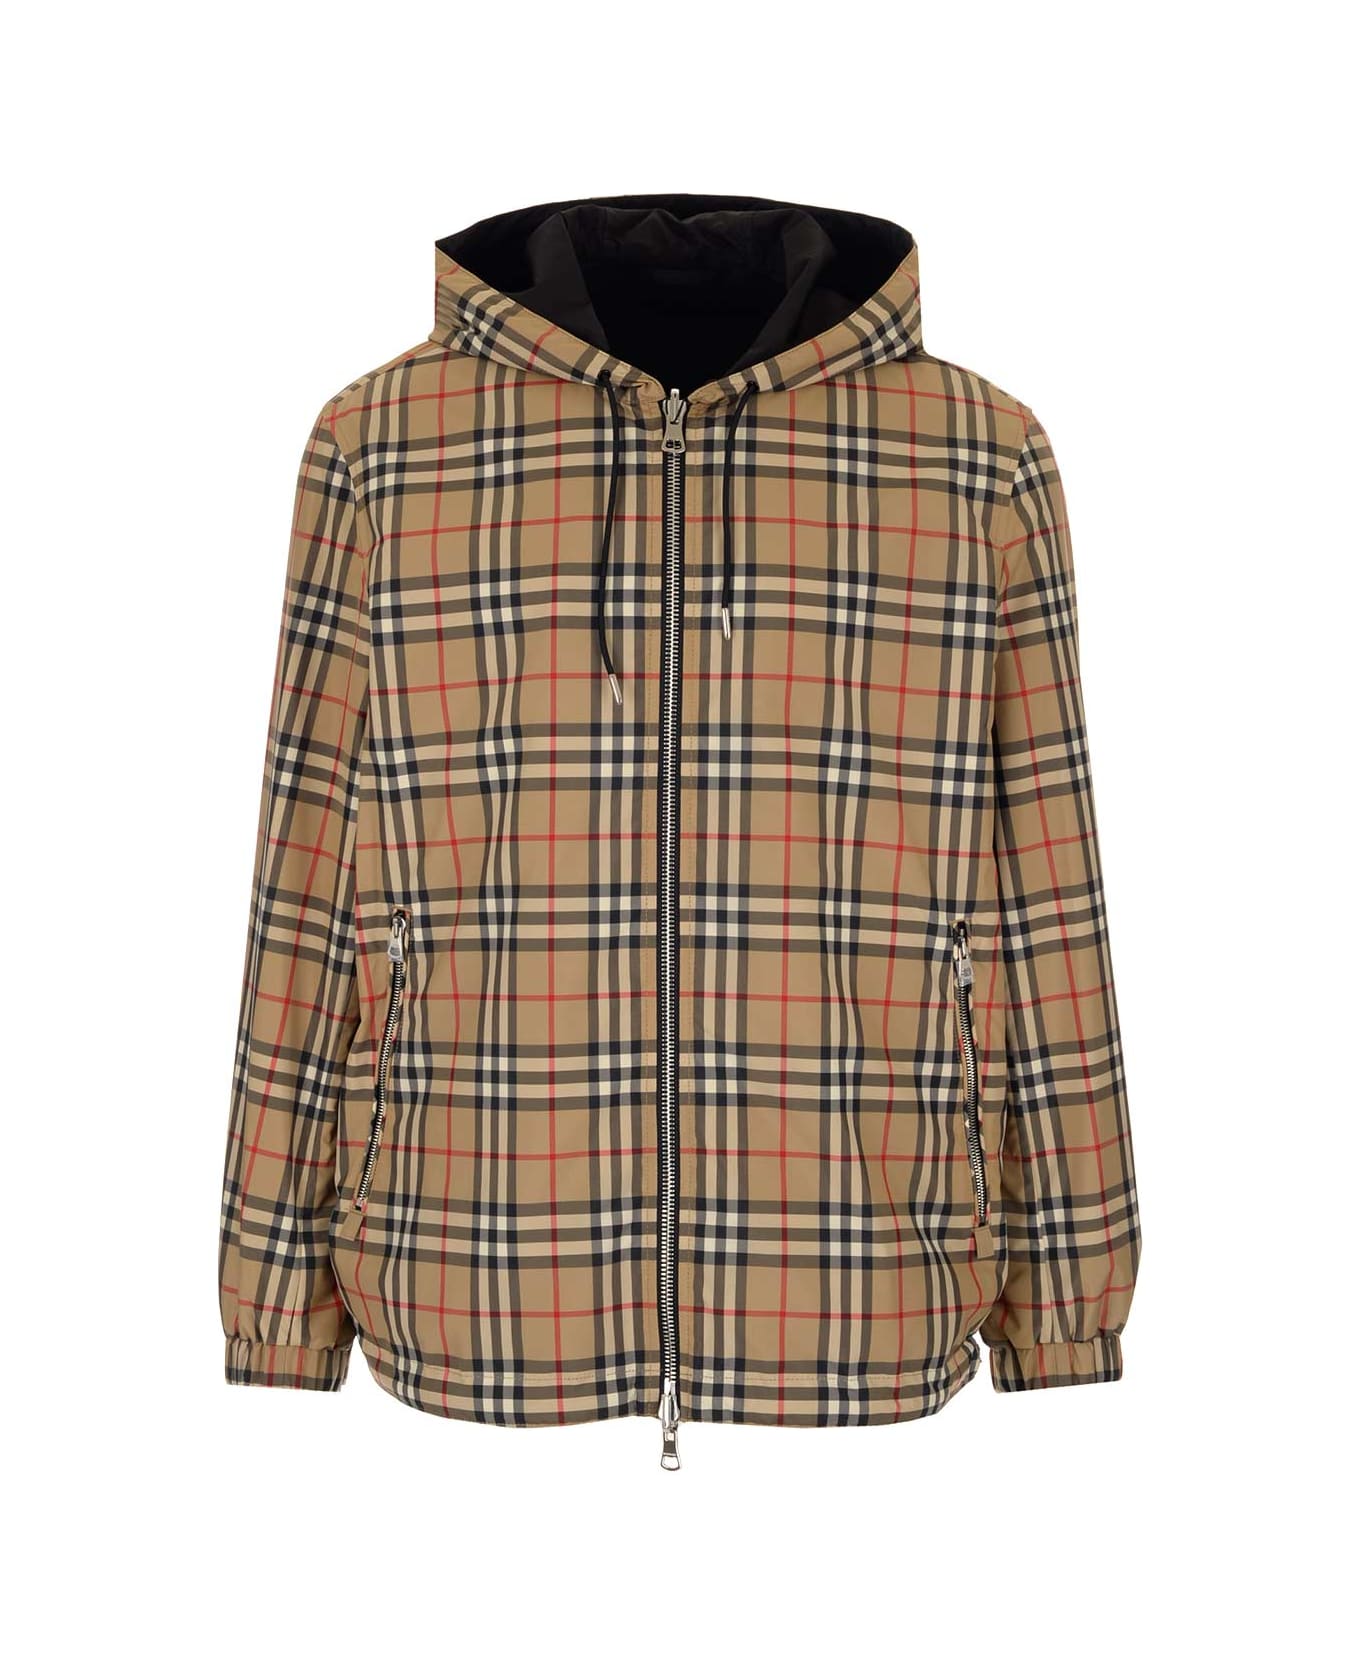 Burberry 'vintage Check' Reversible Jacket - Beige